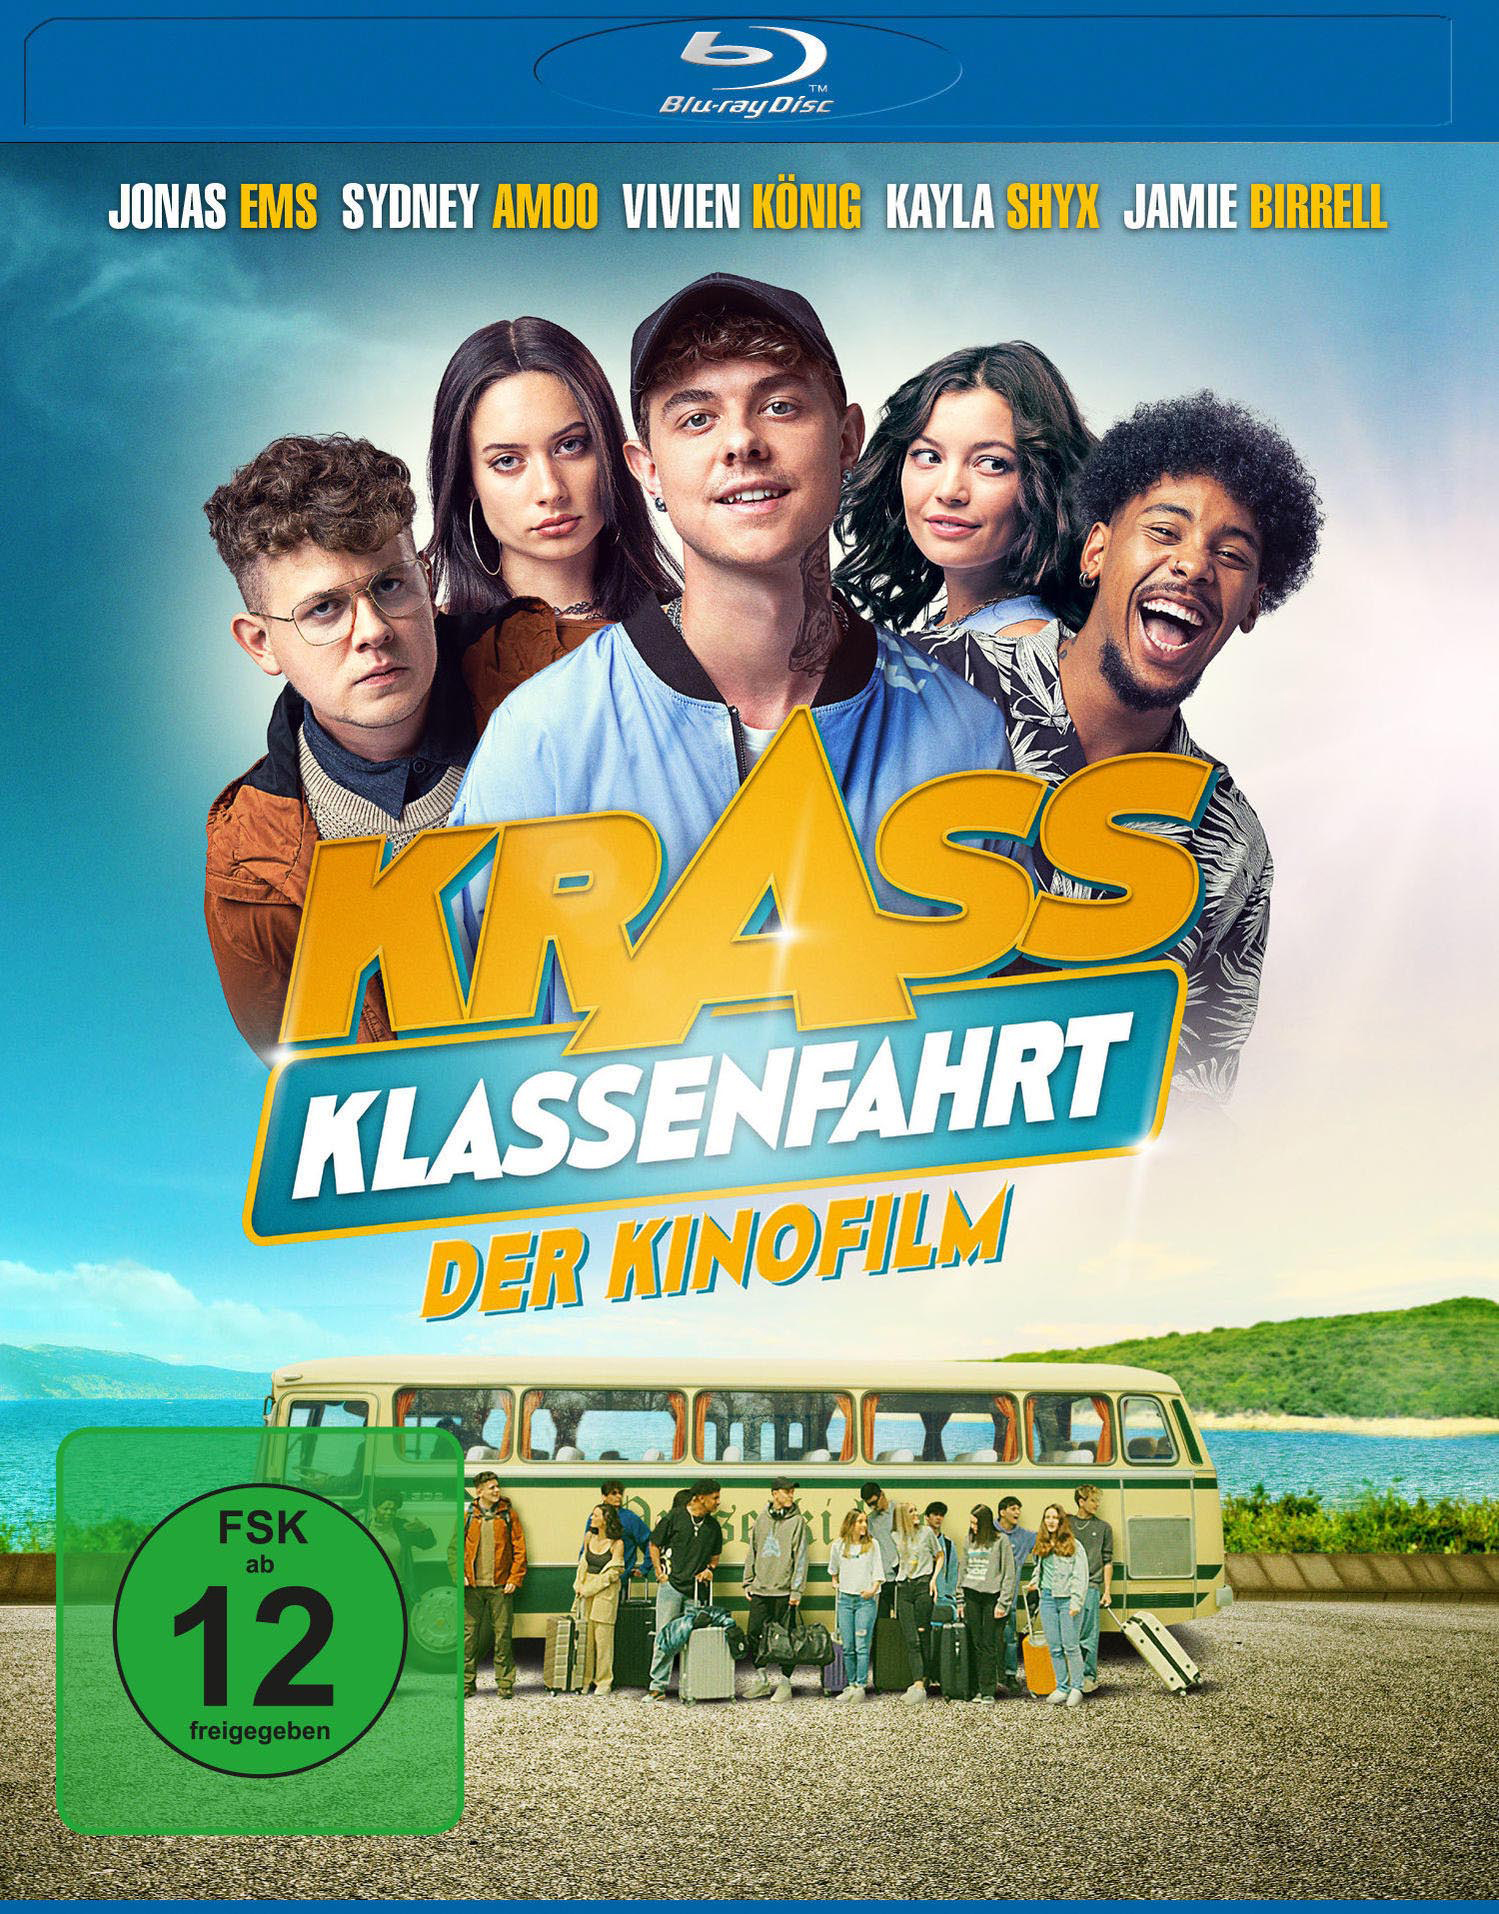 Blu-ray Klassenfahrt Der Kinofilm Krass -